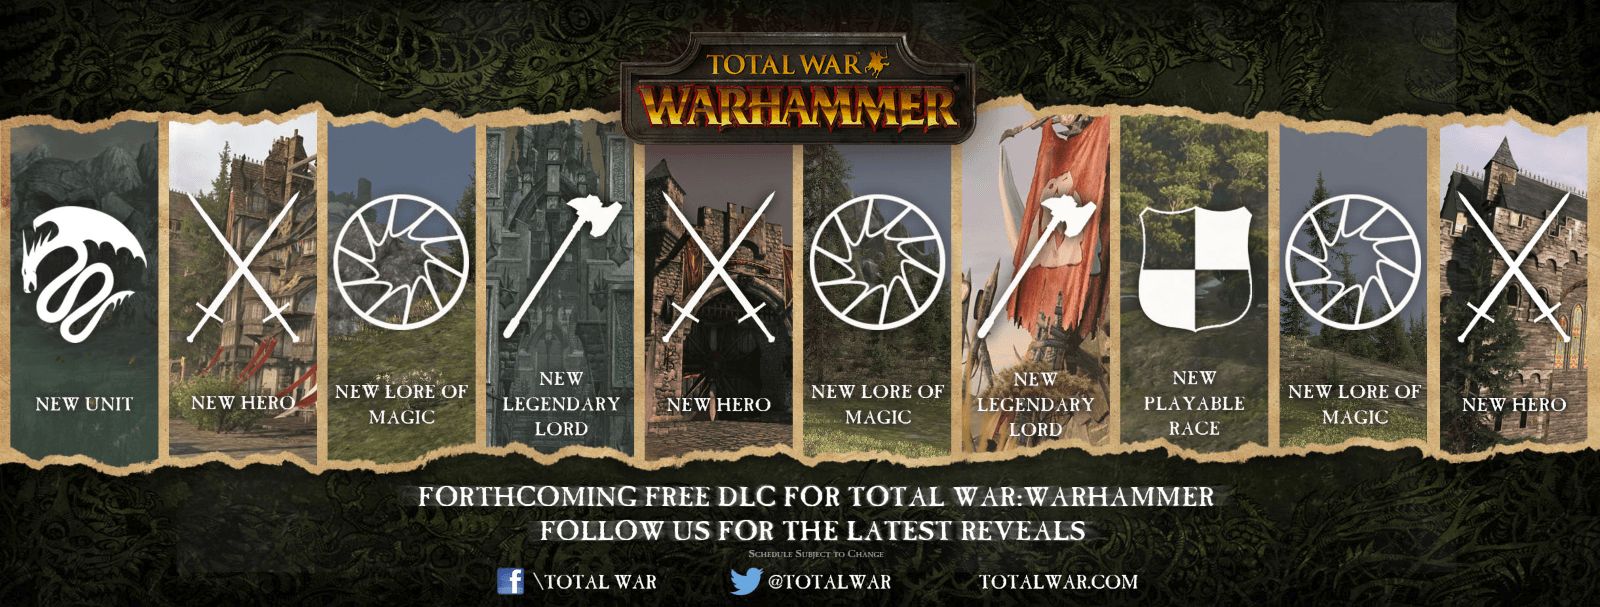 Total War: Warhammer Free DLC Plans Announced